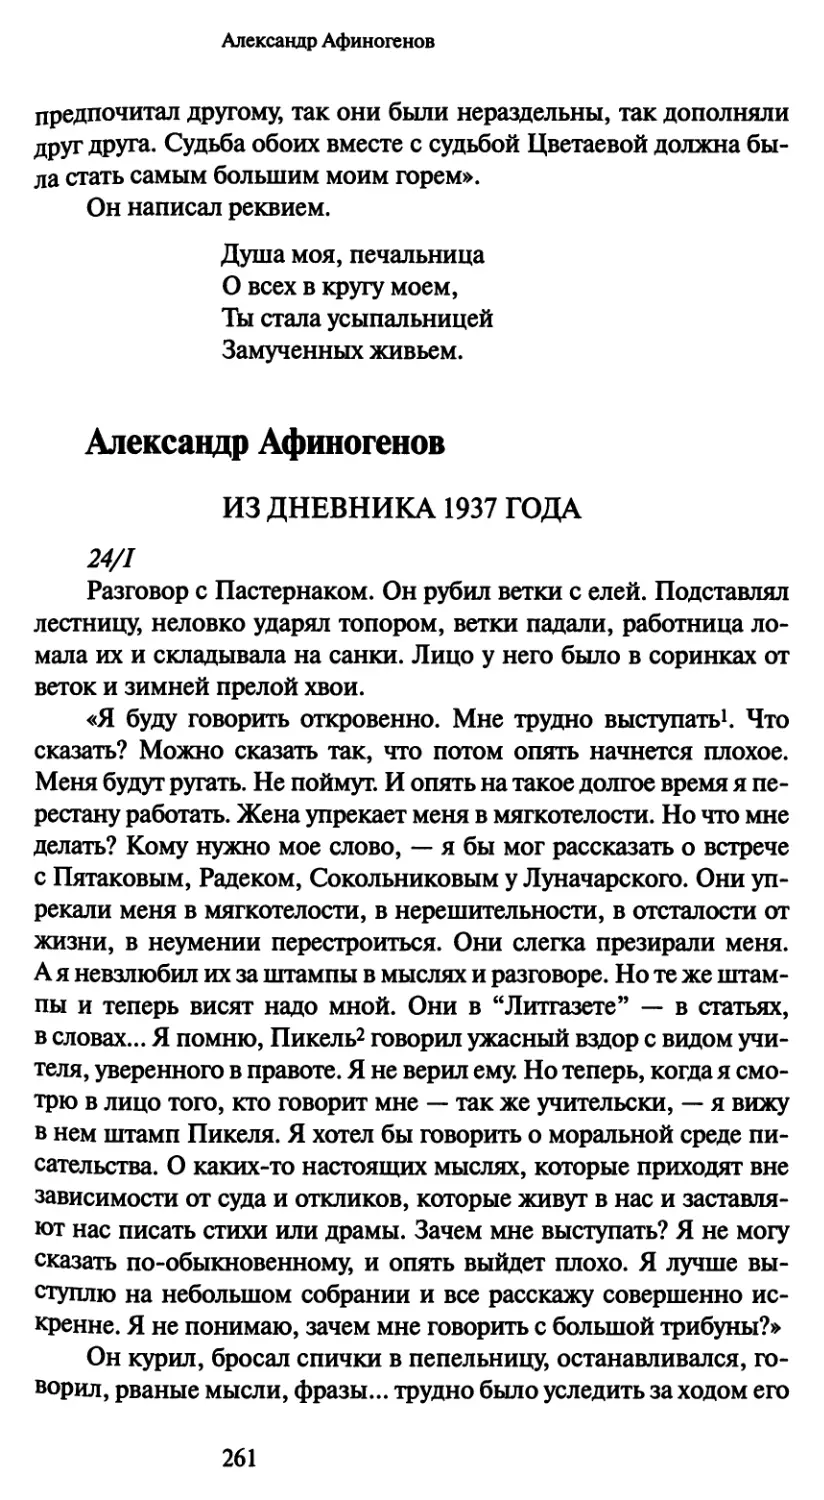 Александр Афиногенов. Из дневника 1937 года